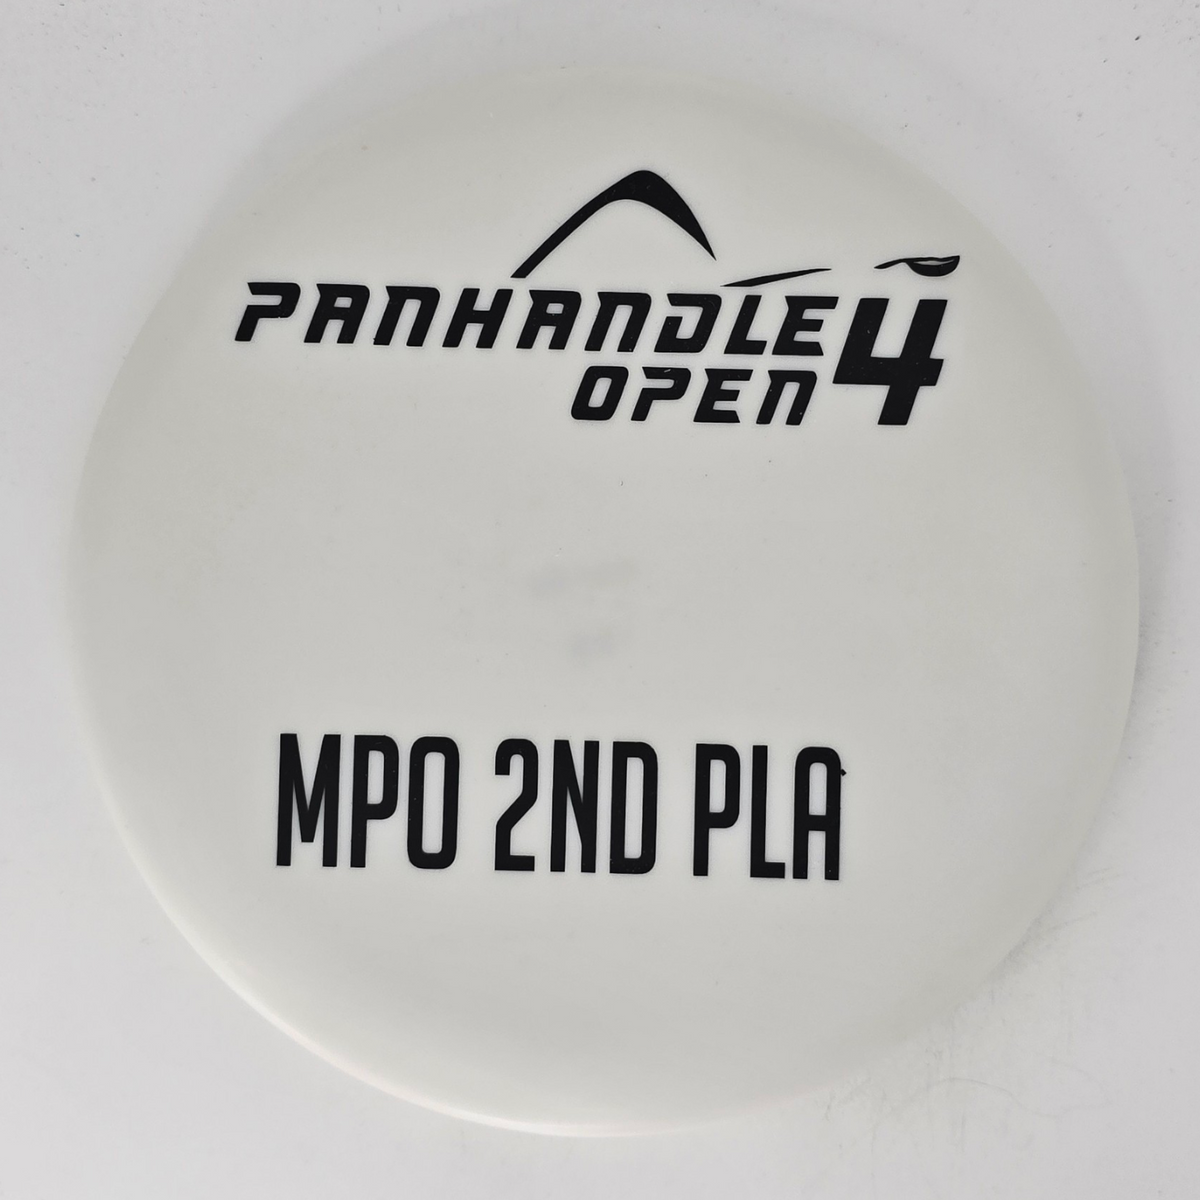 Prodigy RX PA-1 - Panhandle Open 4